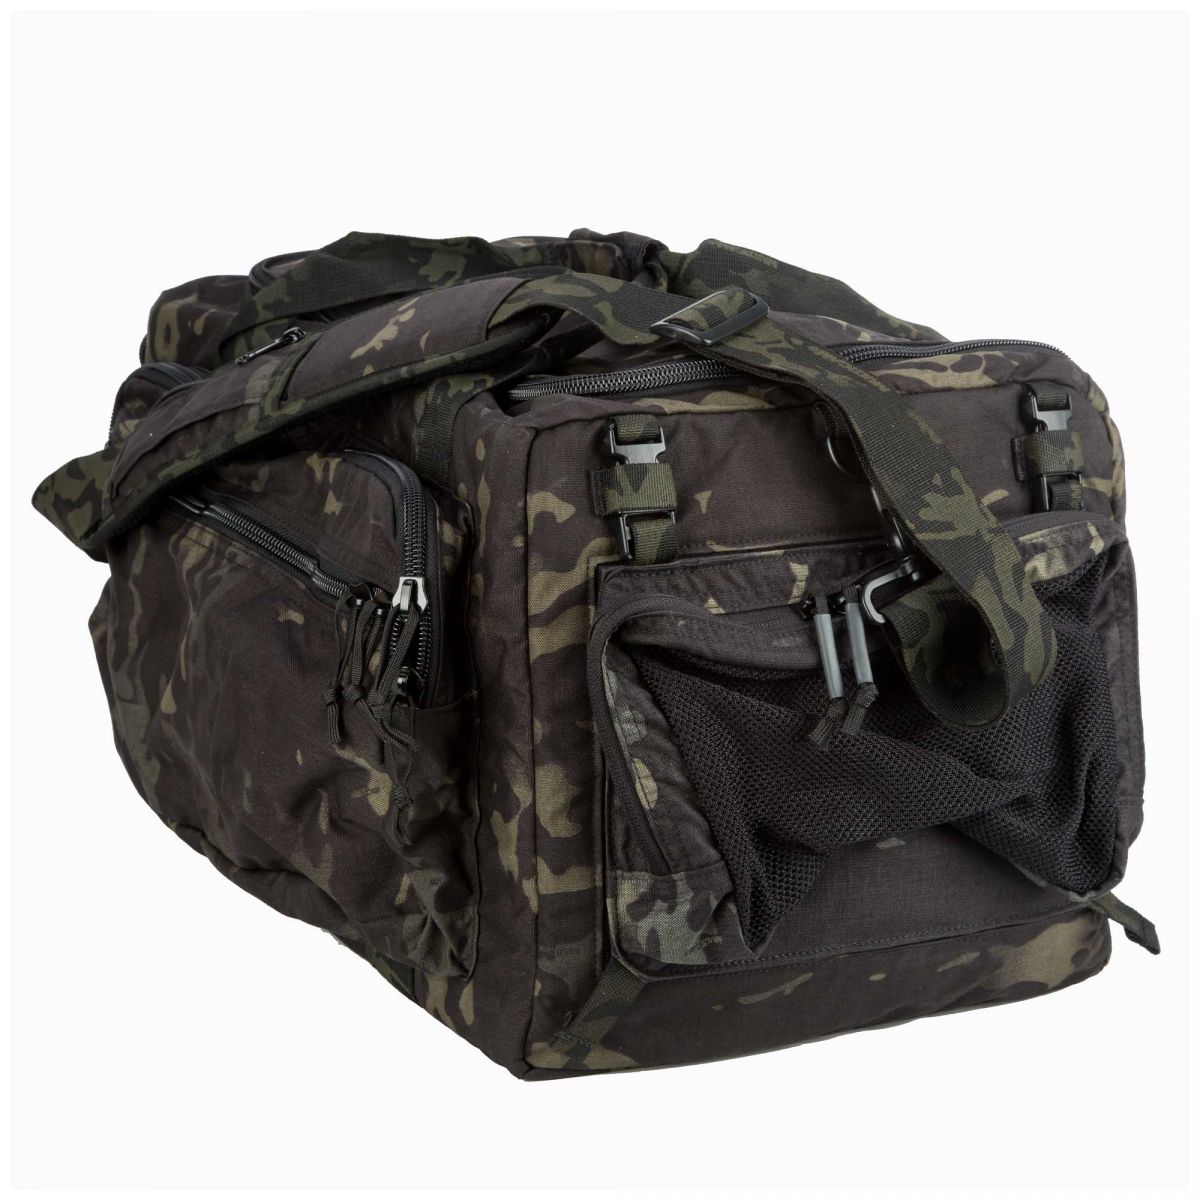 Purchase the LBX MAP Duffle Bag multicam black by ASMC